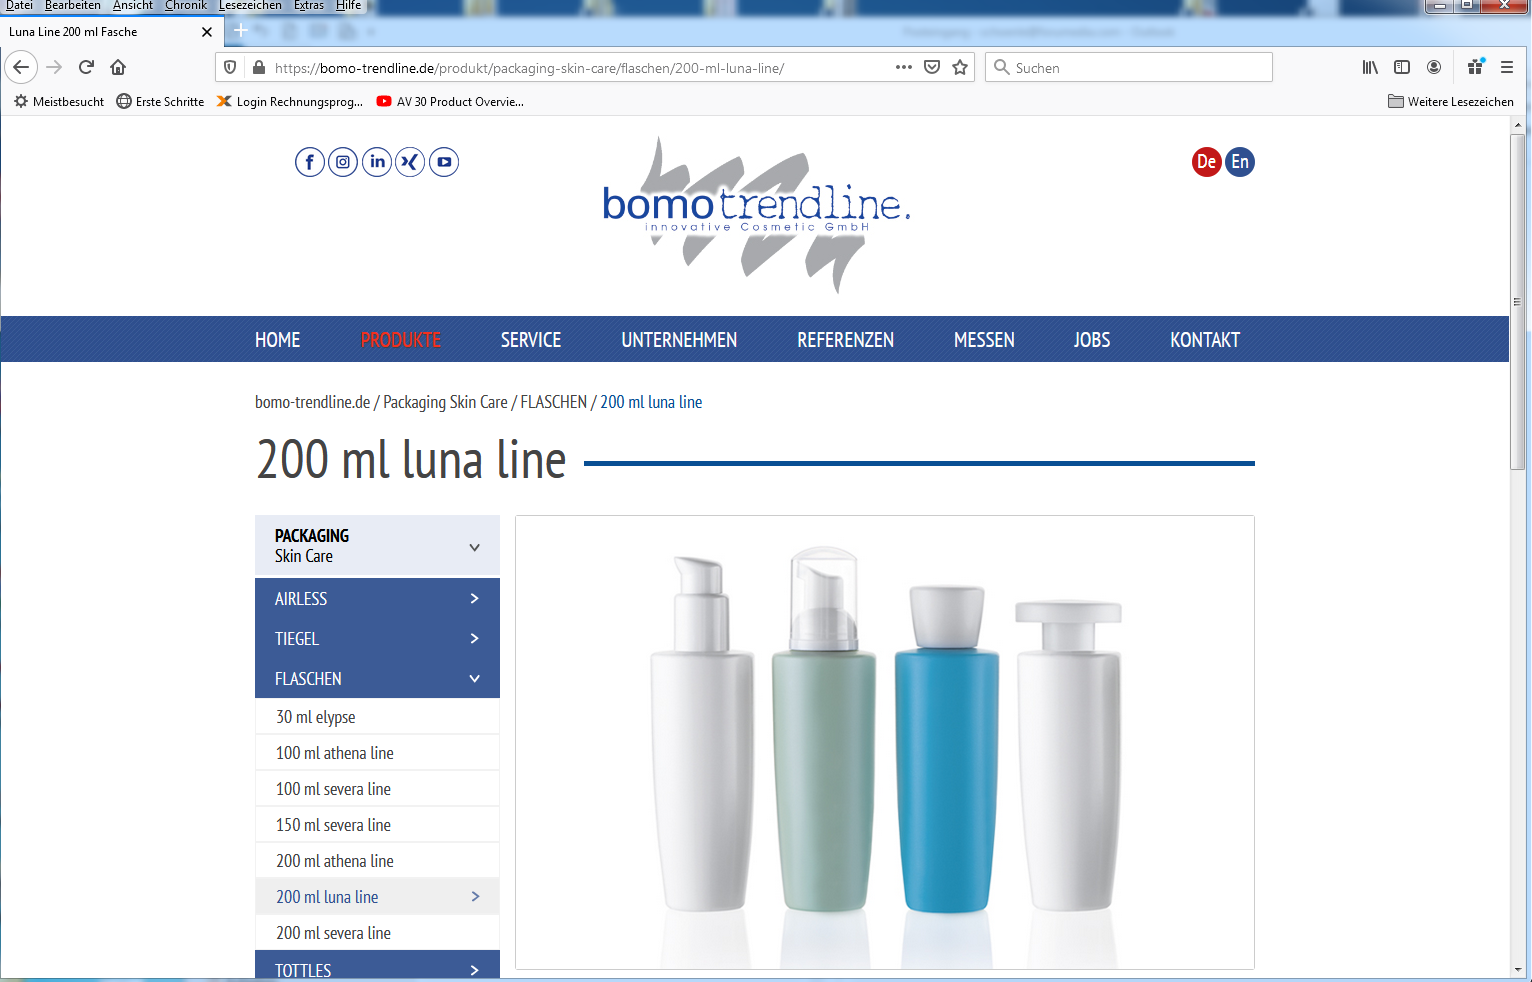 Bomo Trendline GmbH